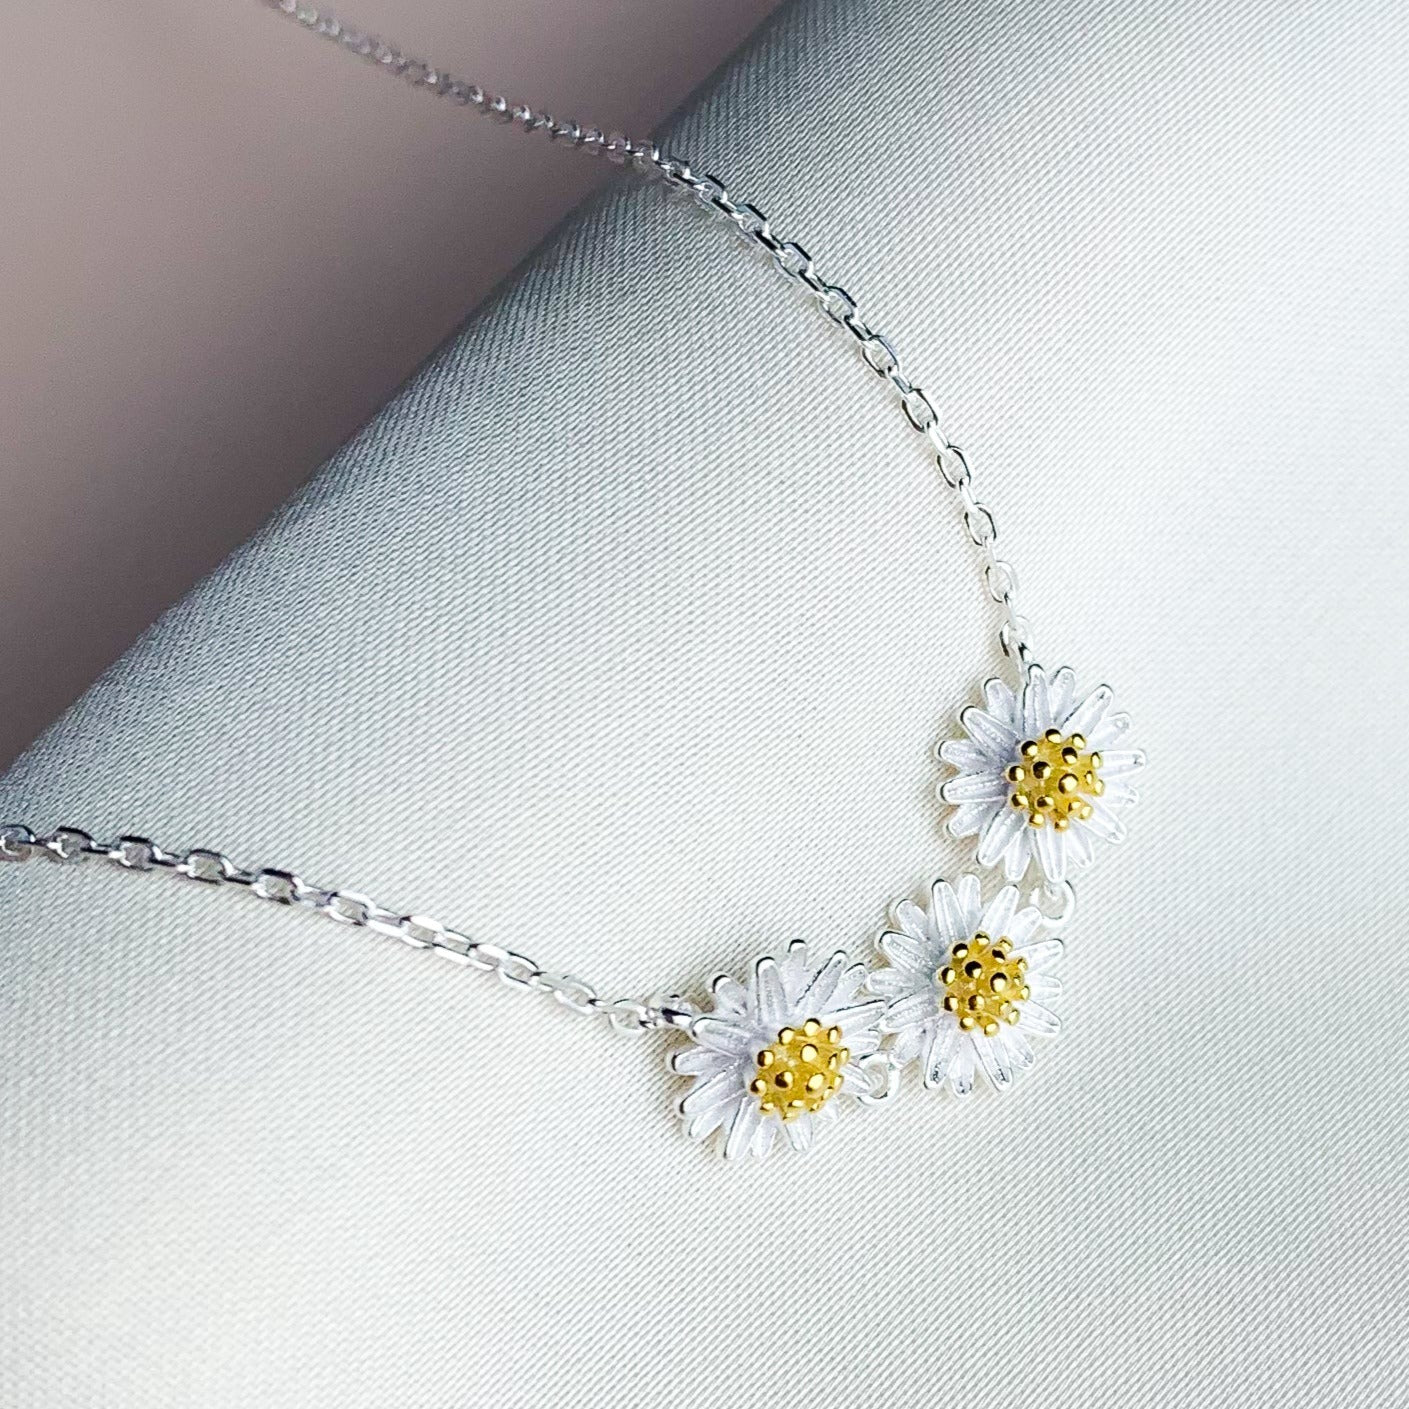 Daisy Trio Pendant Necklace